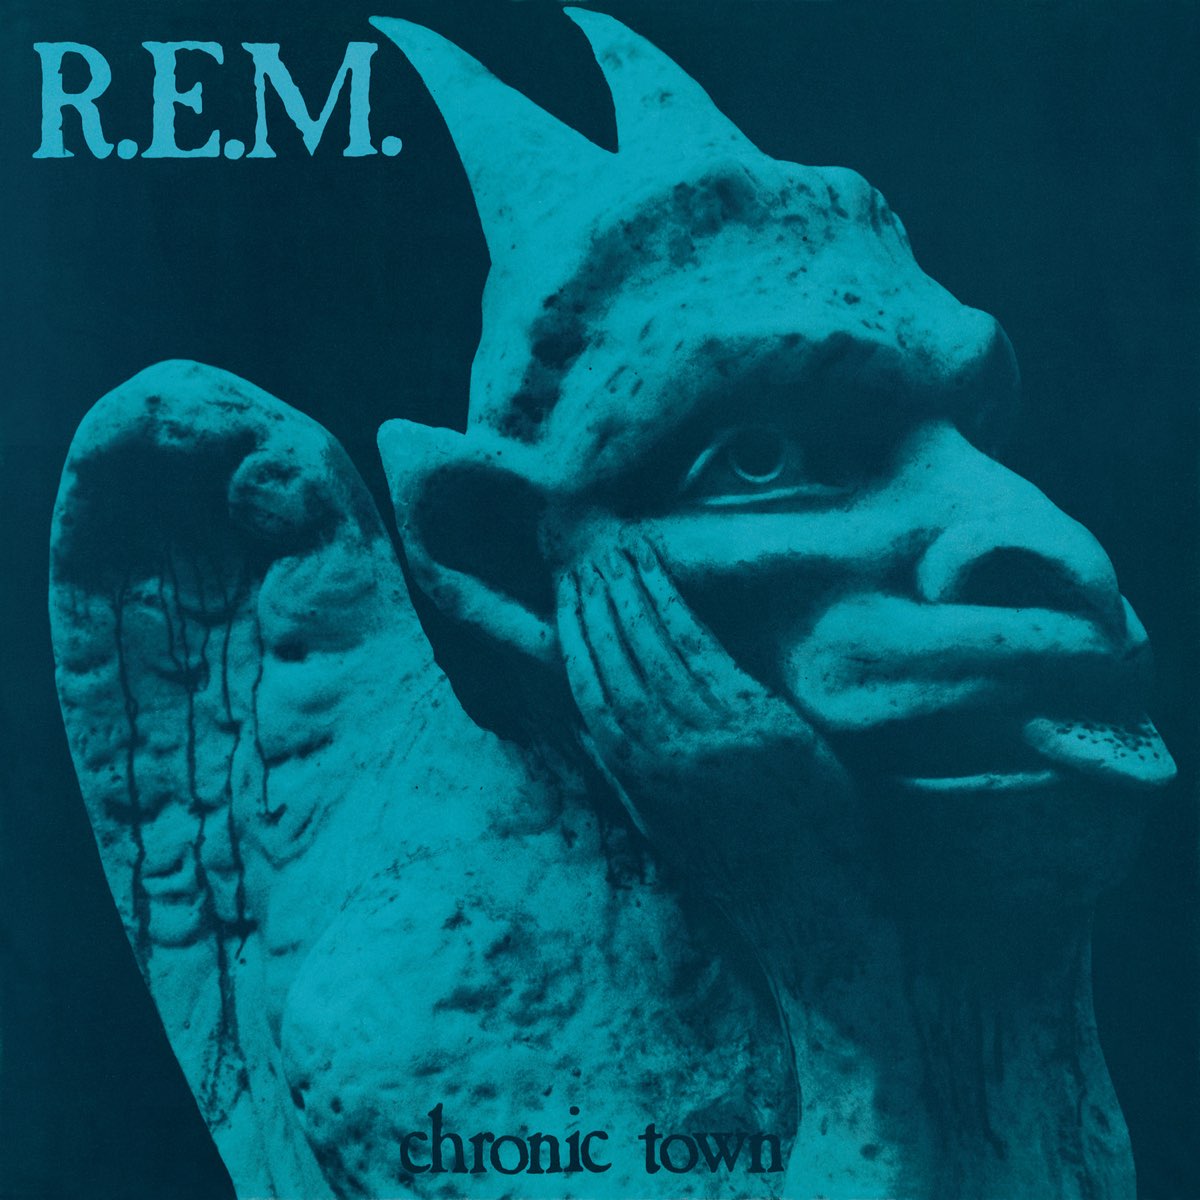 Chronic Town - EP - Album by R.E.M. - Apple Music